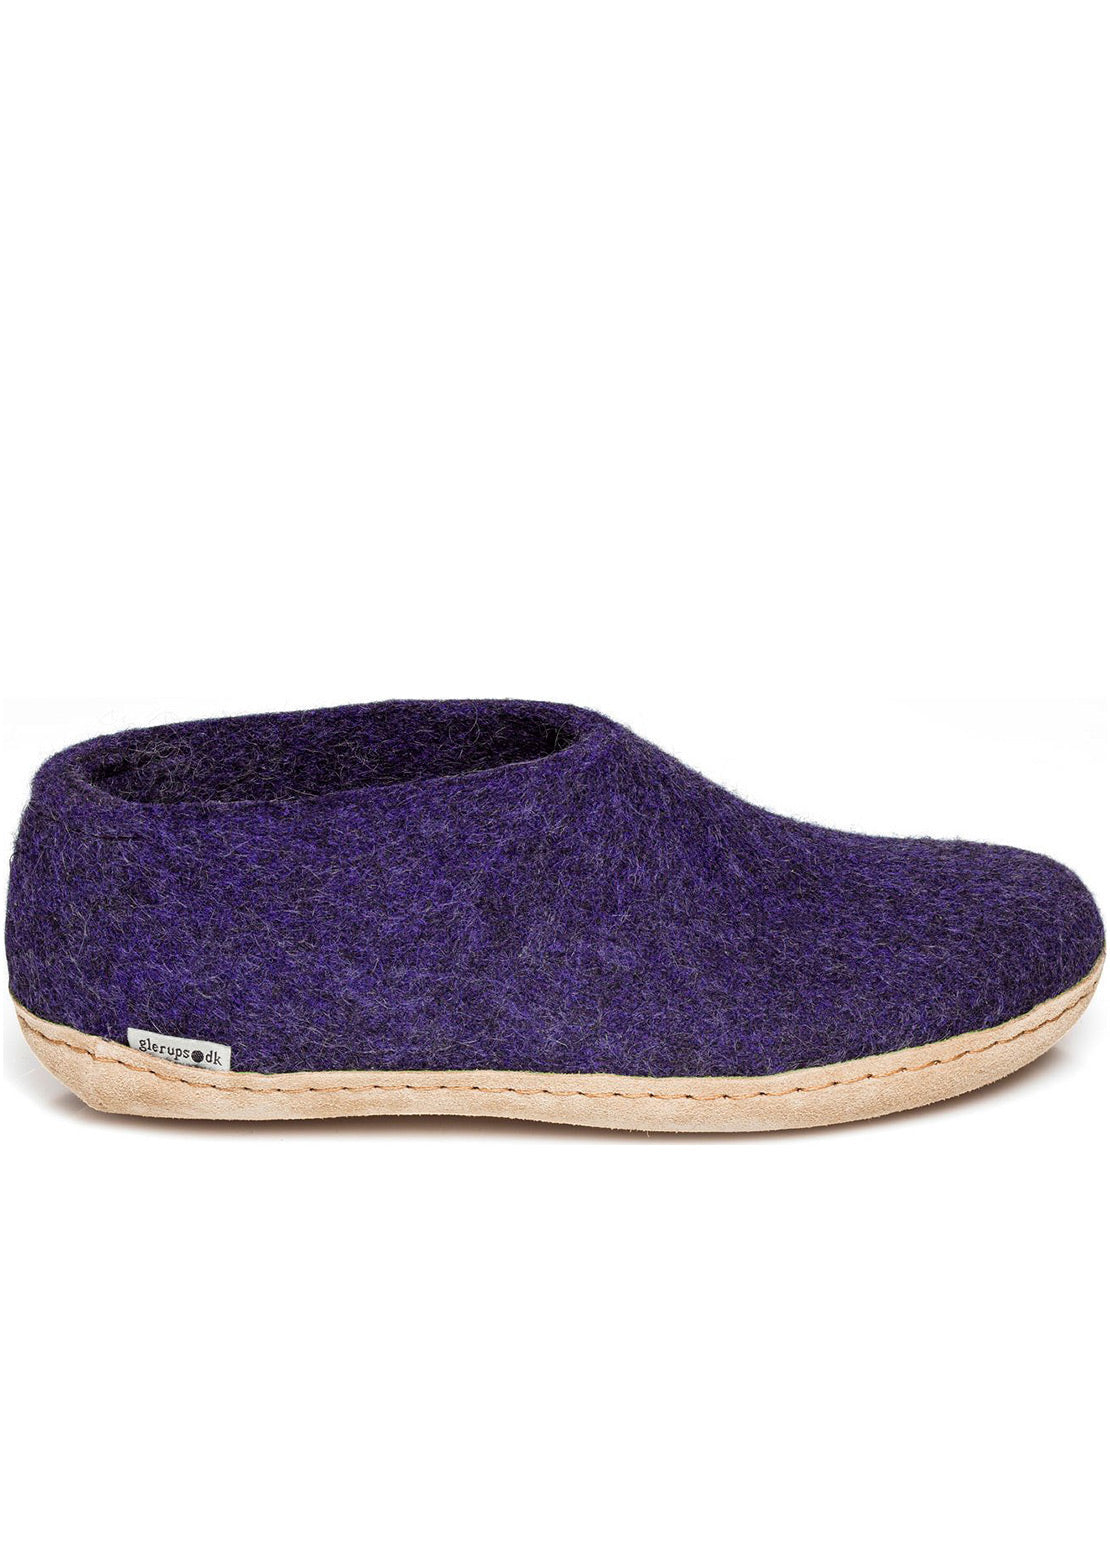 Glerups Unisex Leather Sole Shoes Purple